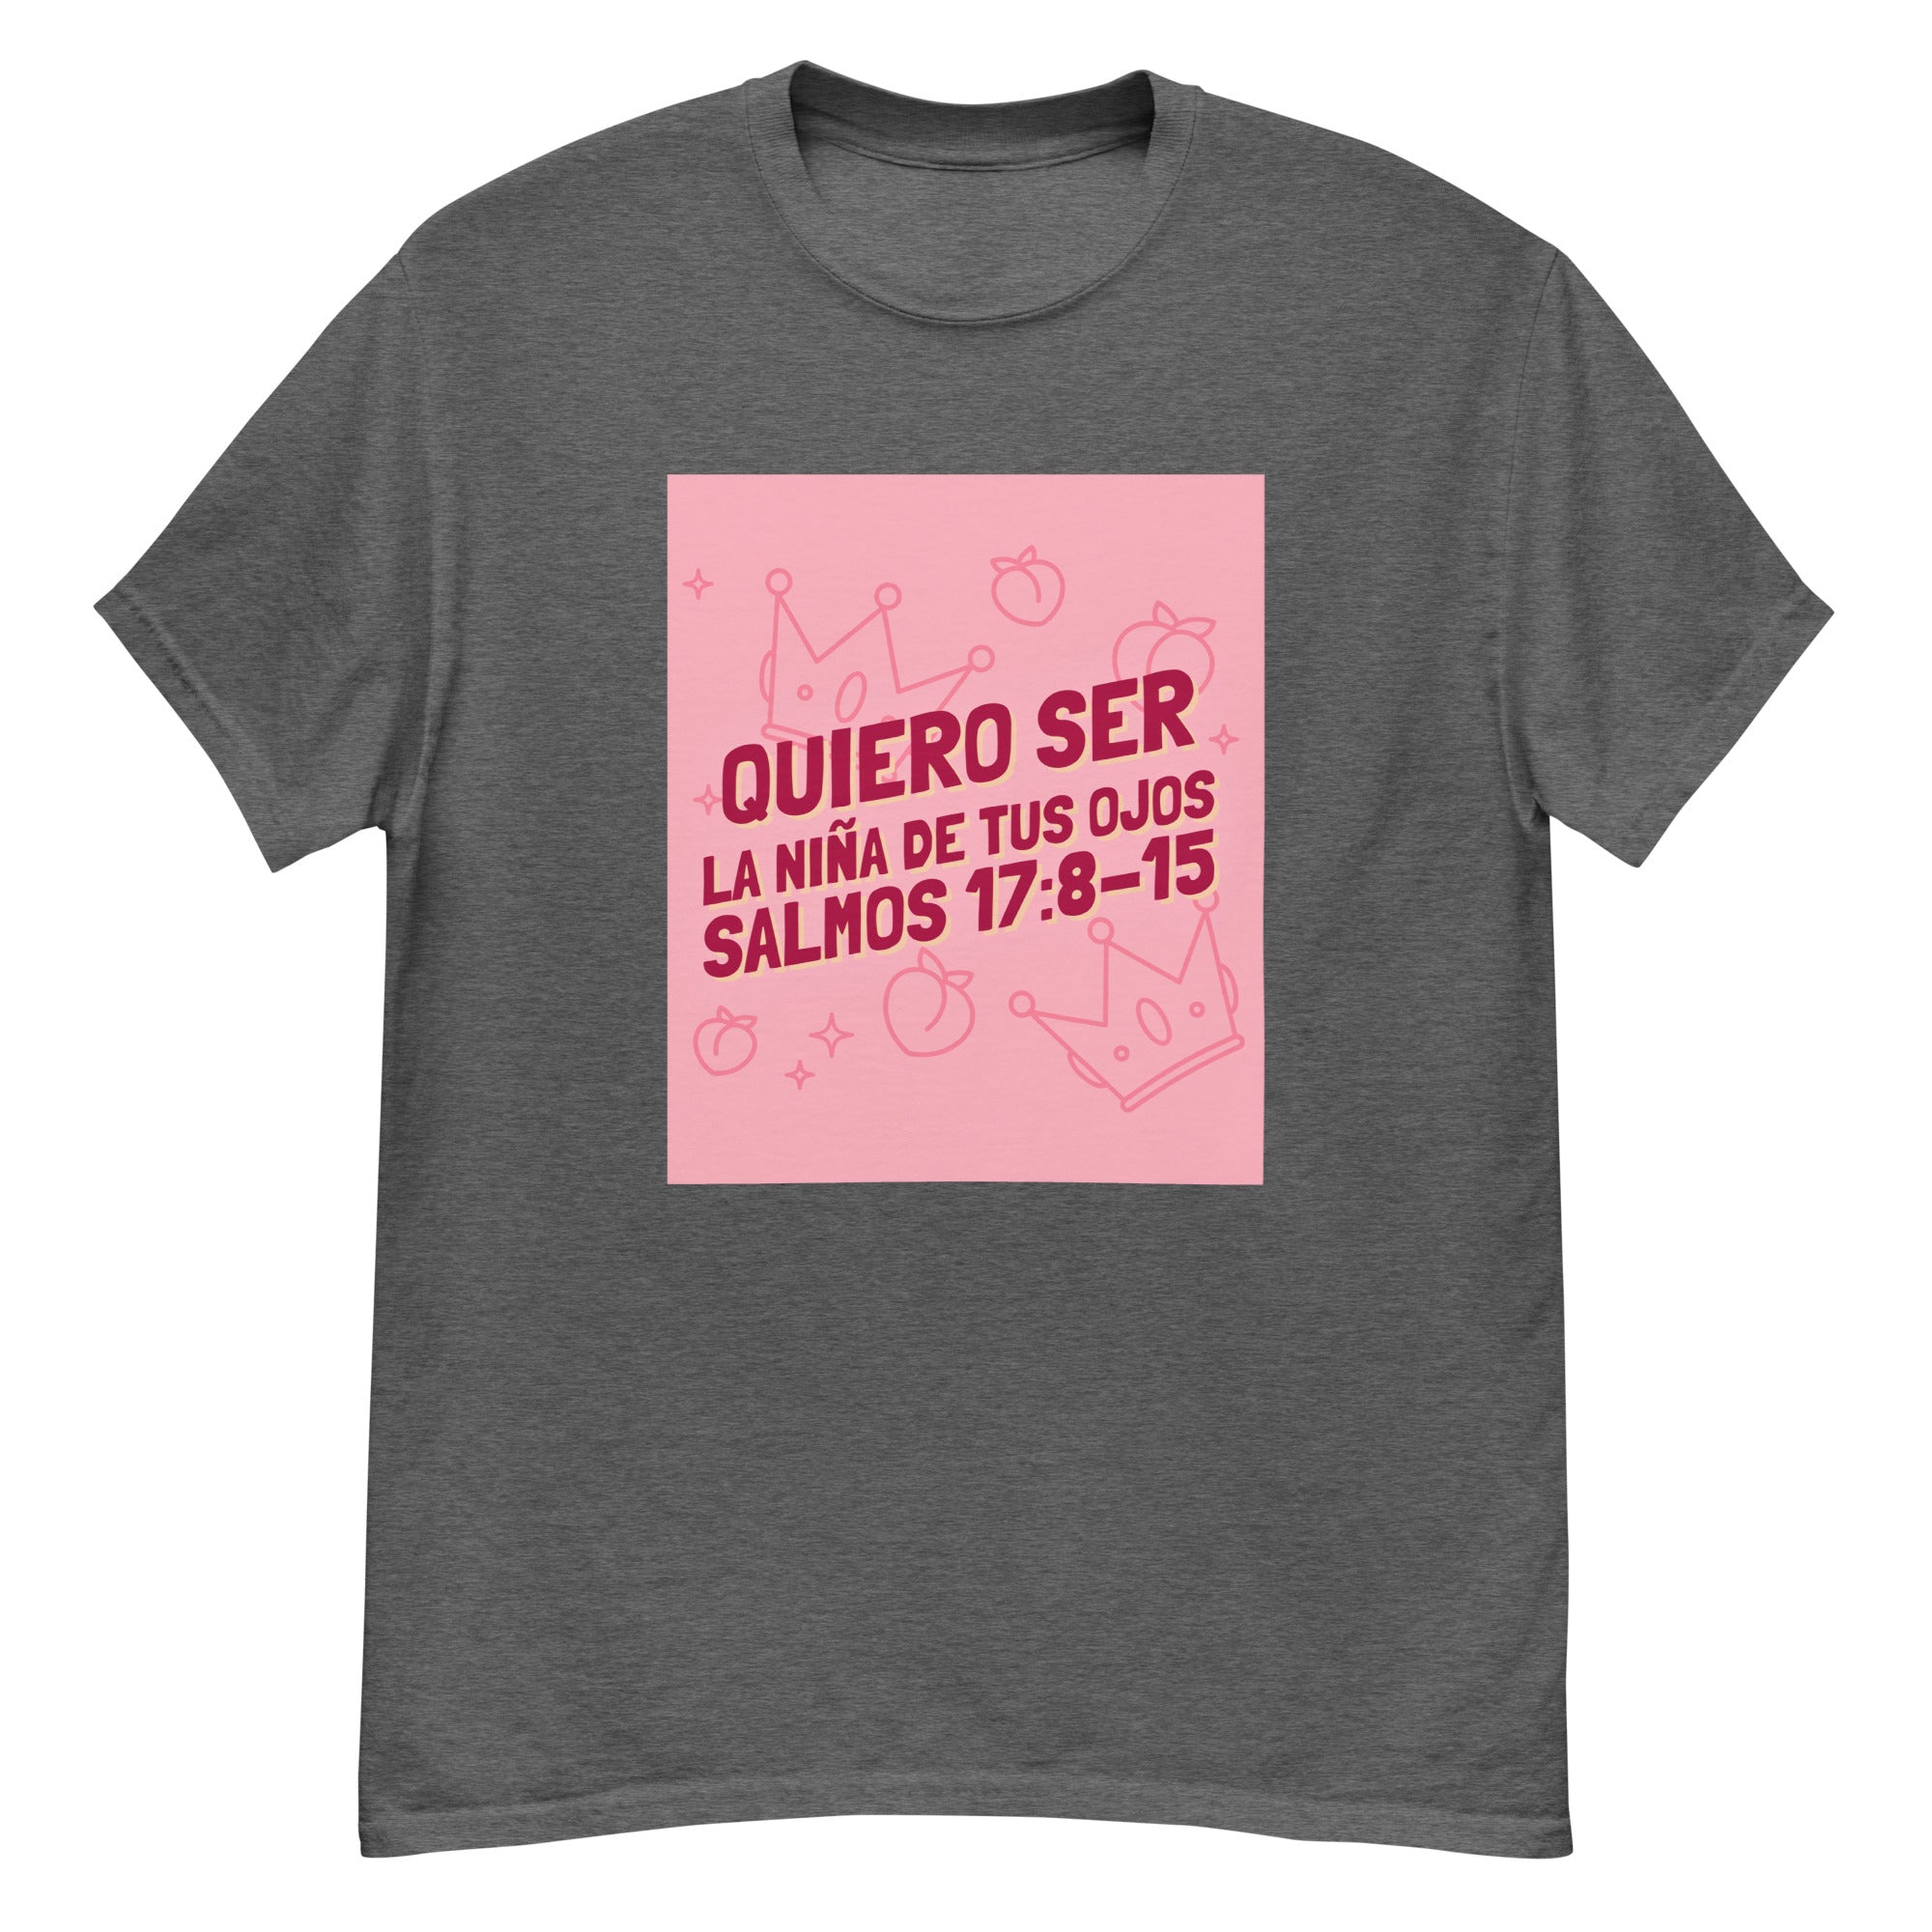 Gamer Edition Camisa Salmos 17:8 Men's classic tee